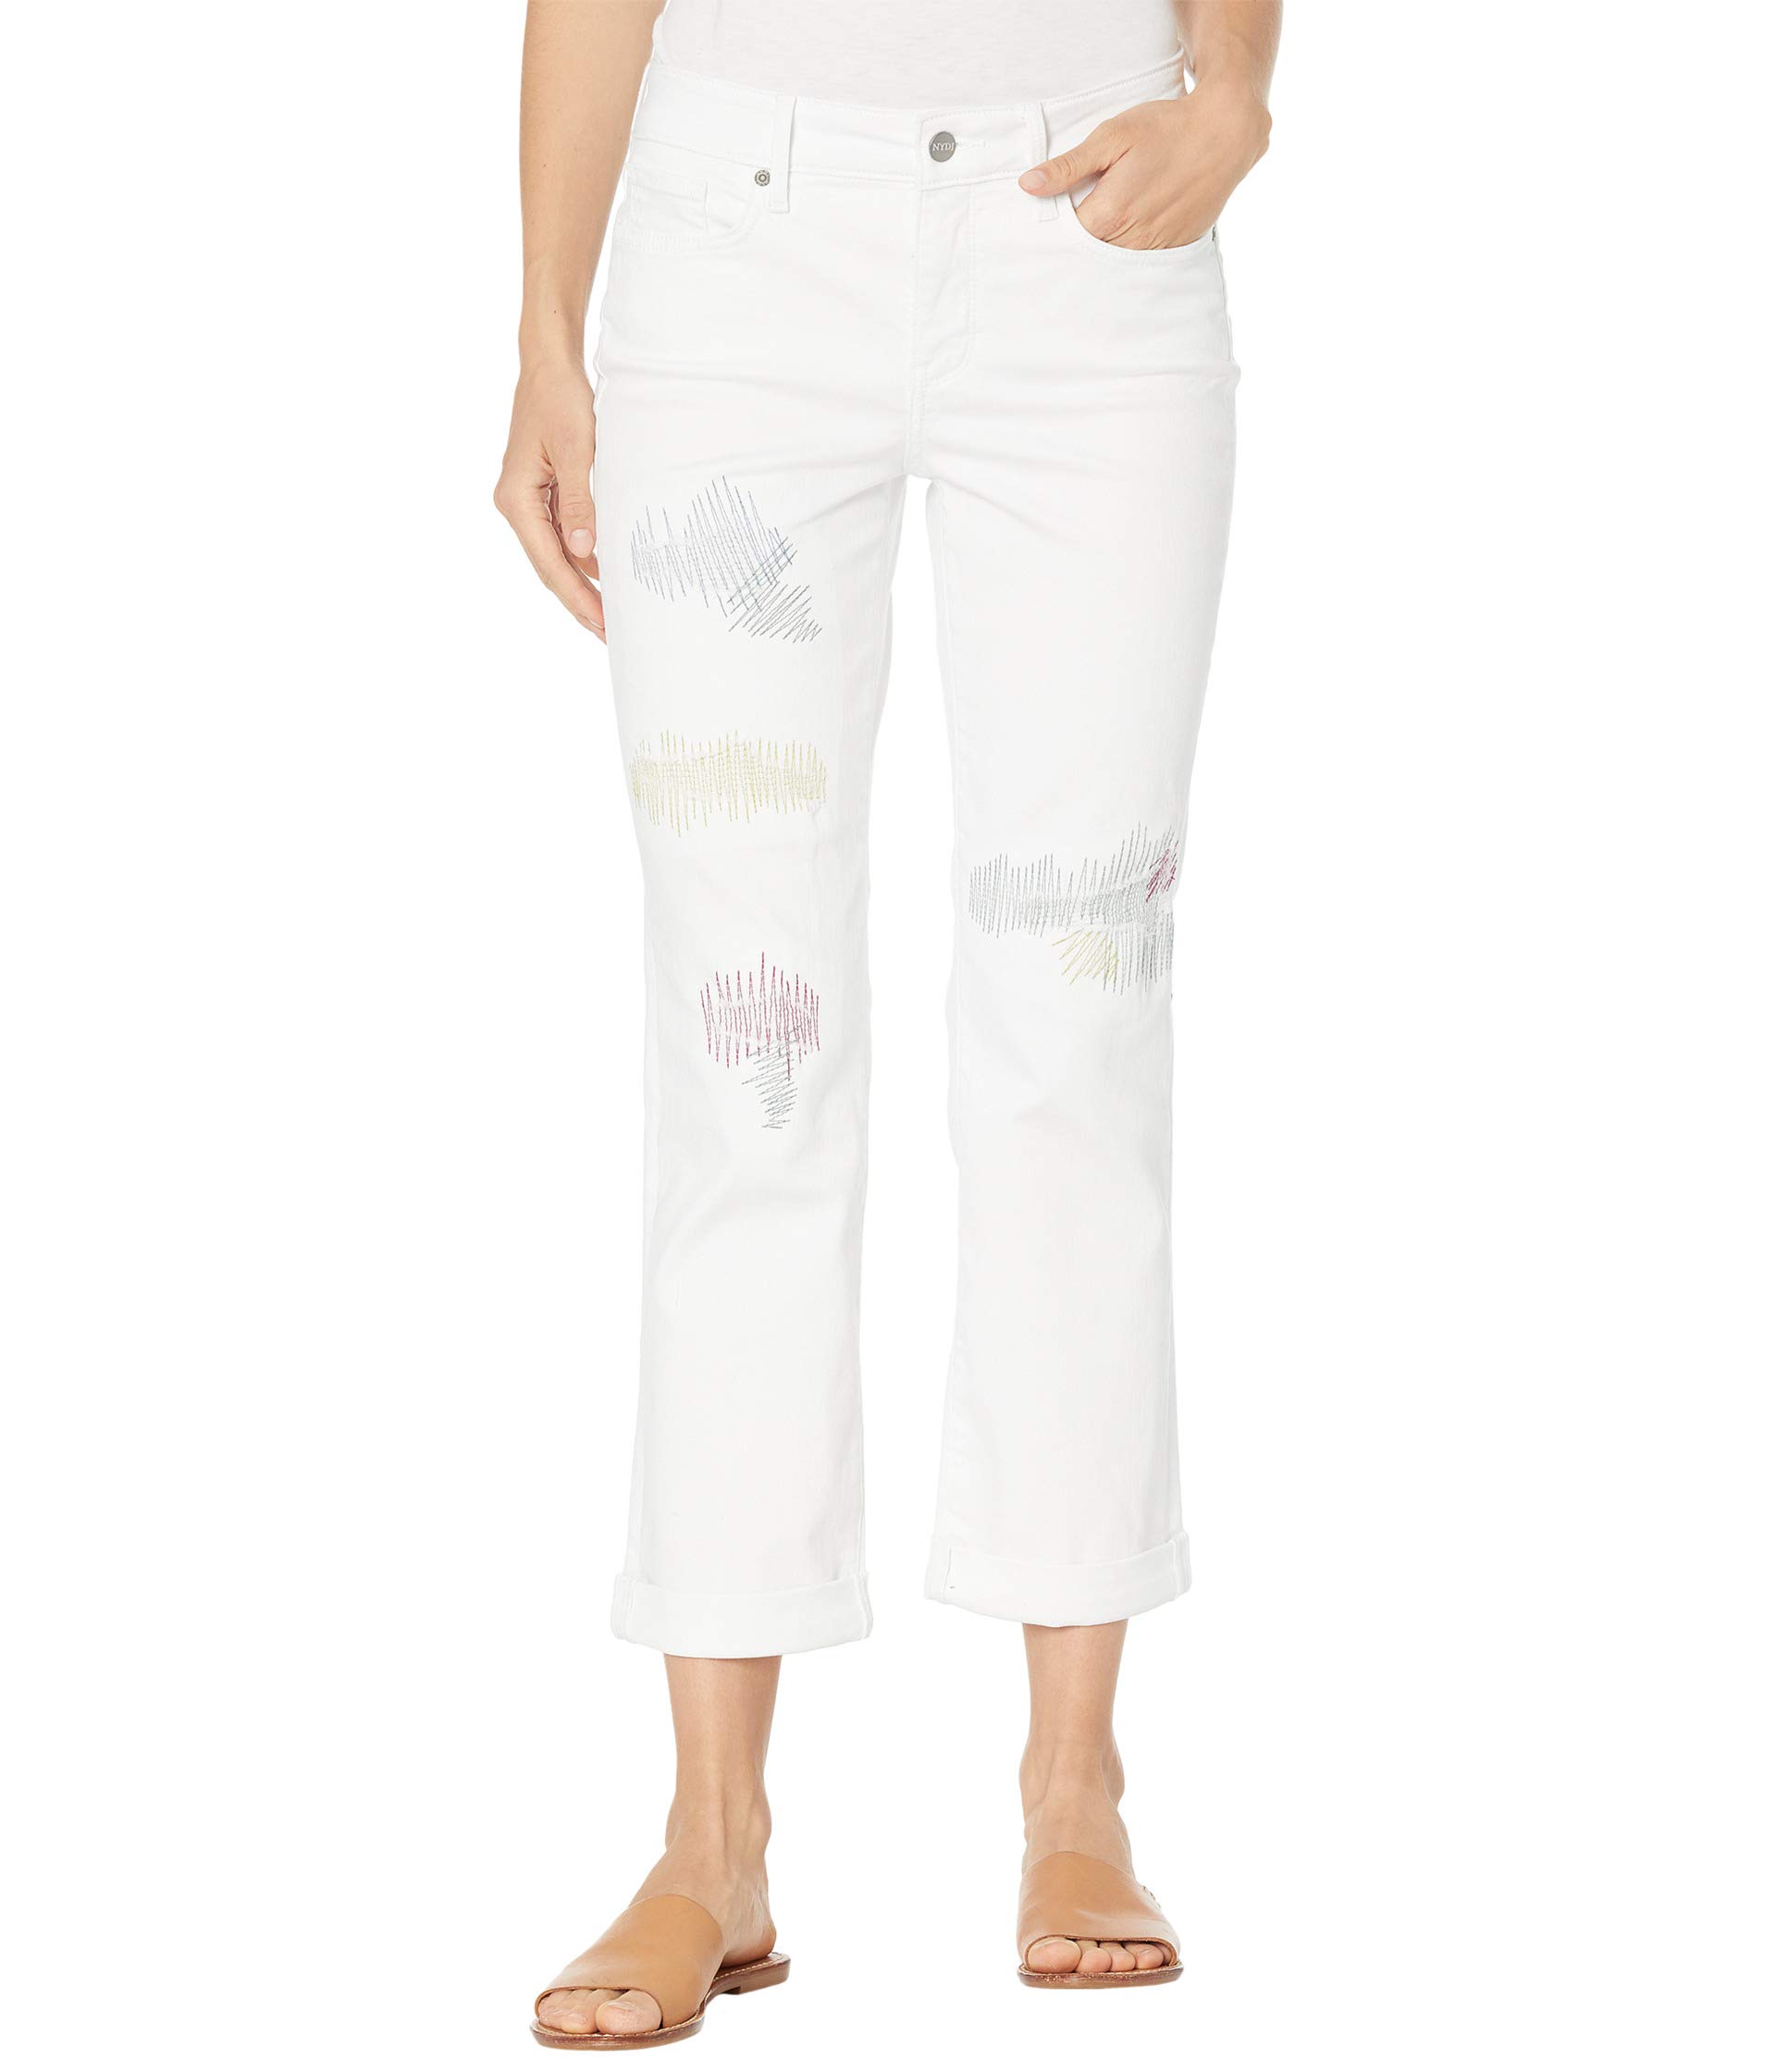 Джинсы NYDJ, Marilyn Straight Ankle Jeans in Optic White джинсы waist match marilyn straight in optic white nydj цвет optic white